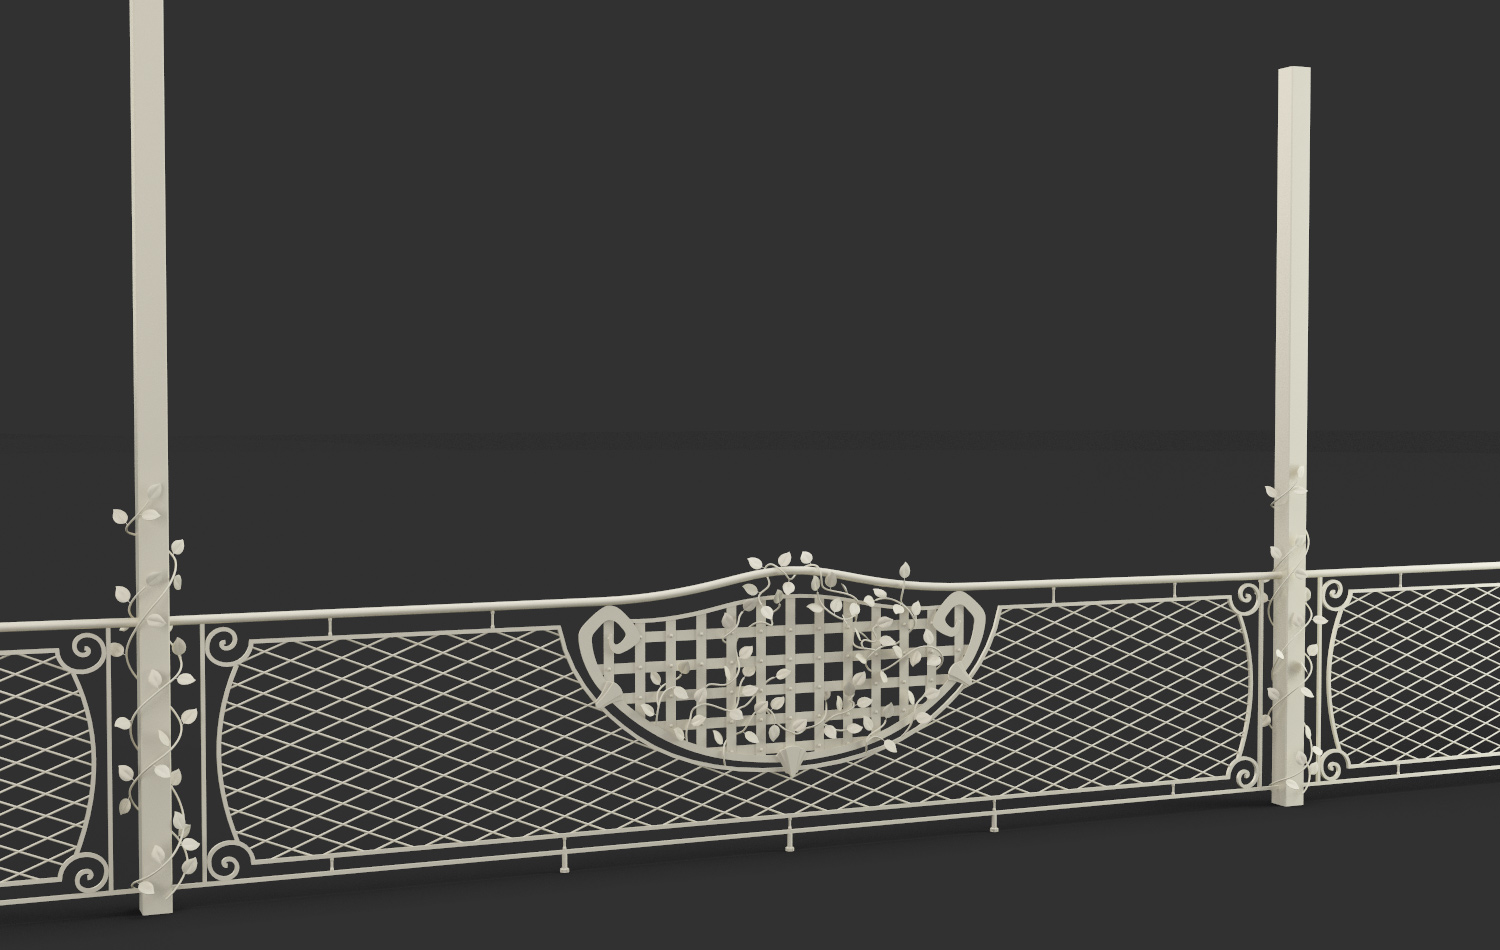 Creation of 3D Models for Architectural Visualization. 3D Design Studio “Monaco Felice”.